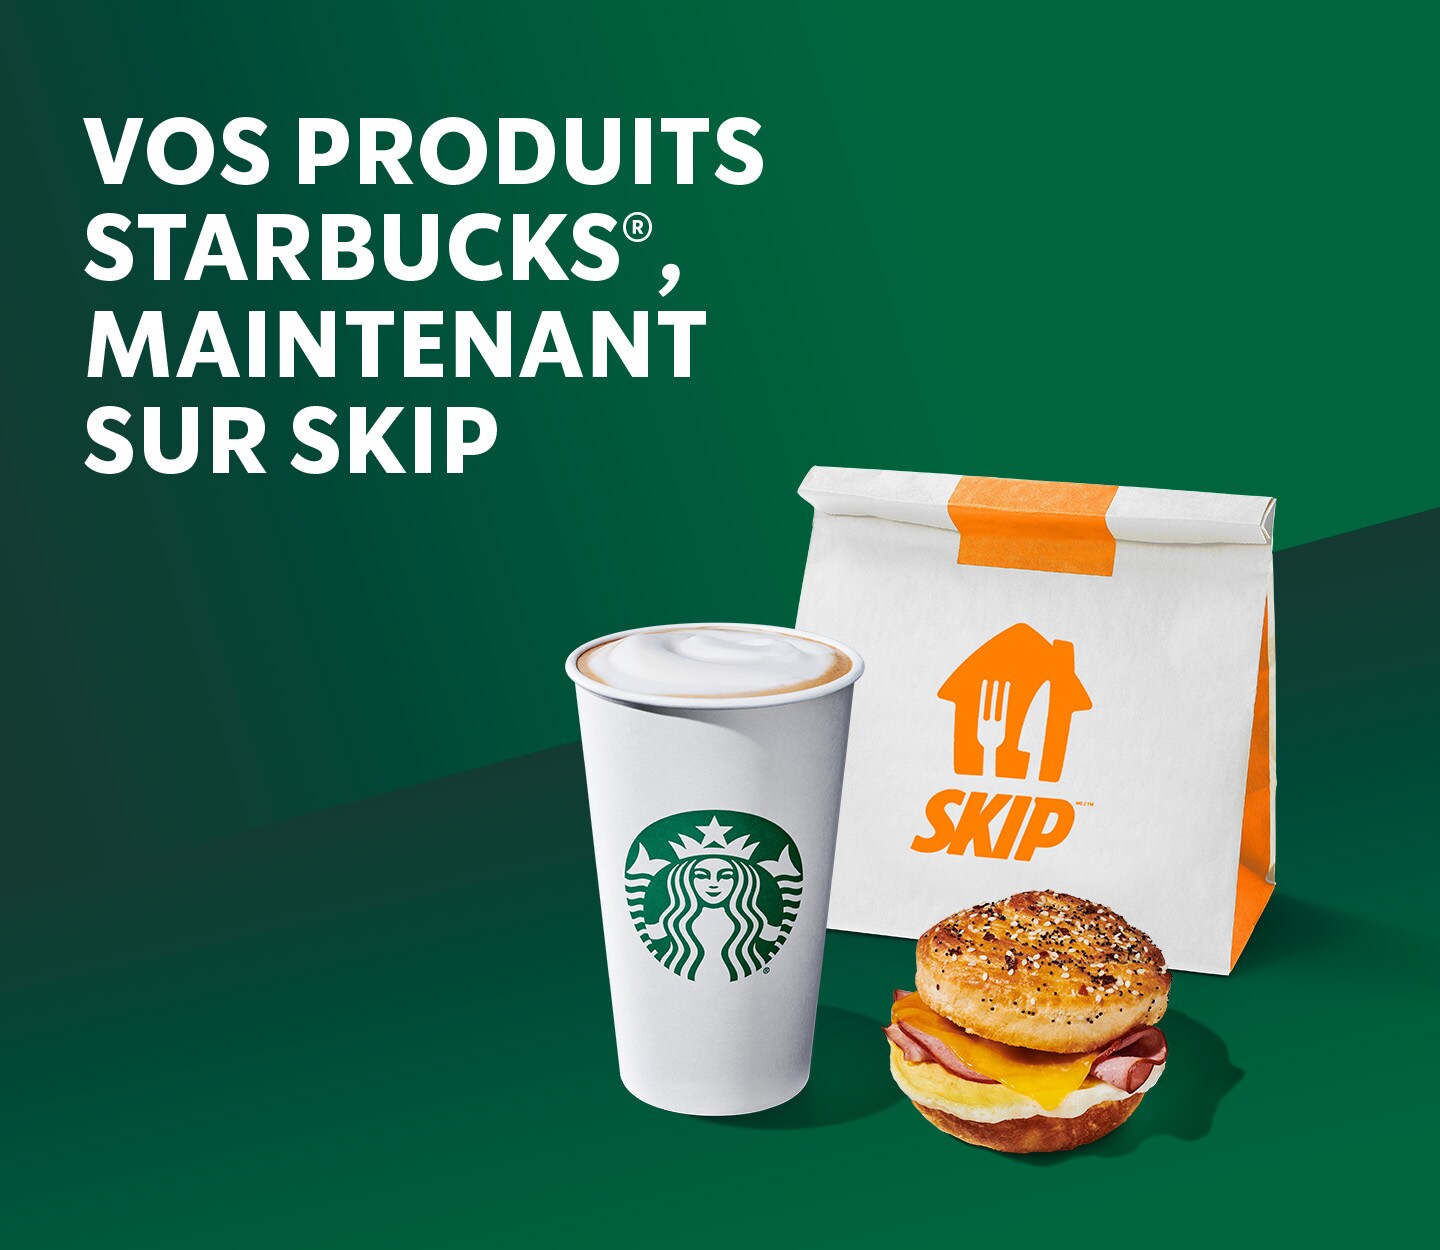 VOS PRODUITS STARBUCKS MAINTENANT SUR SKIP | Produits Starbucks avec un sac pour emporter Skip